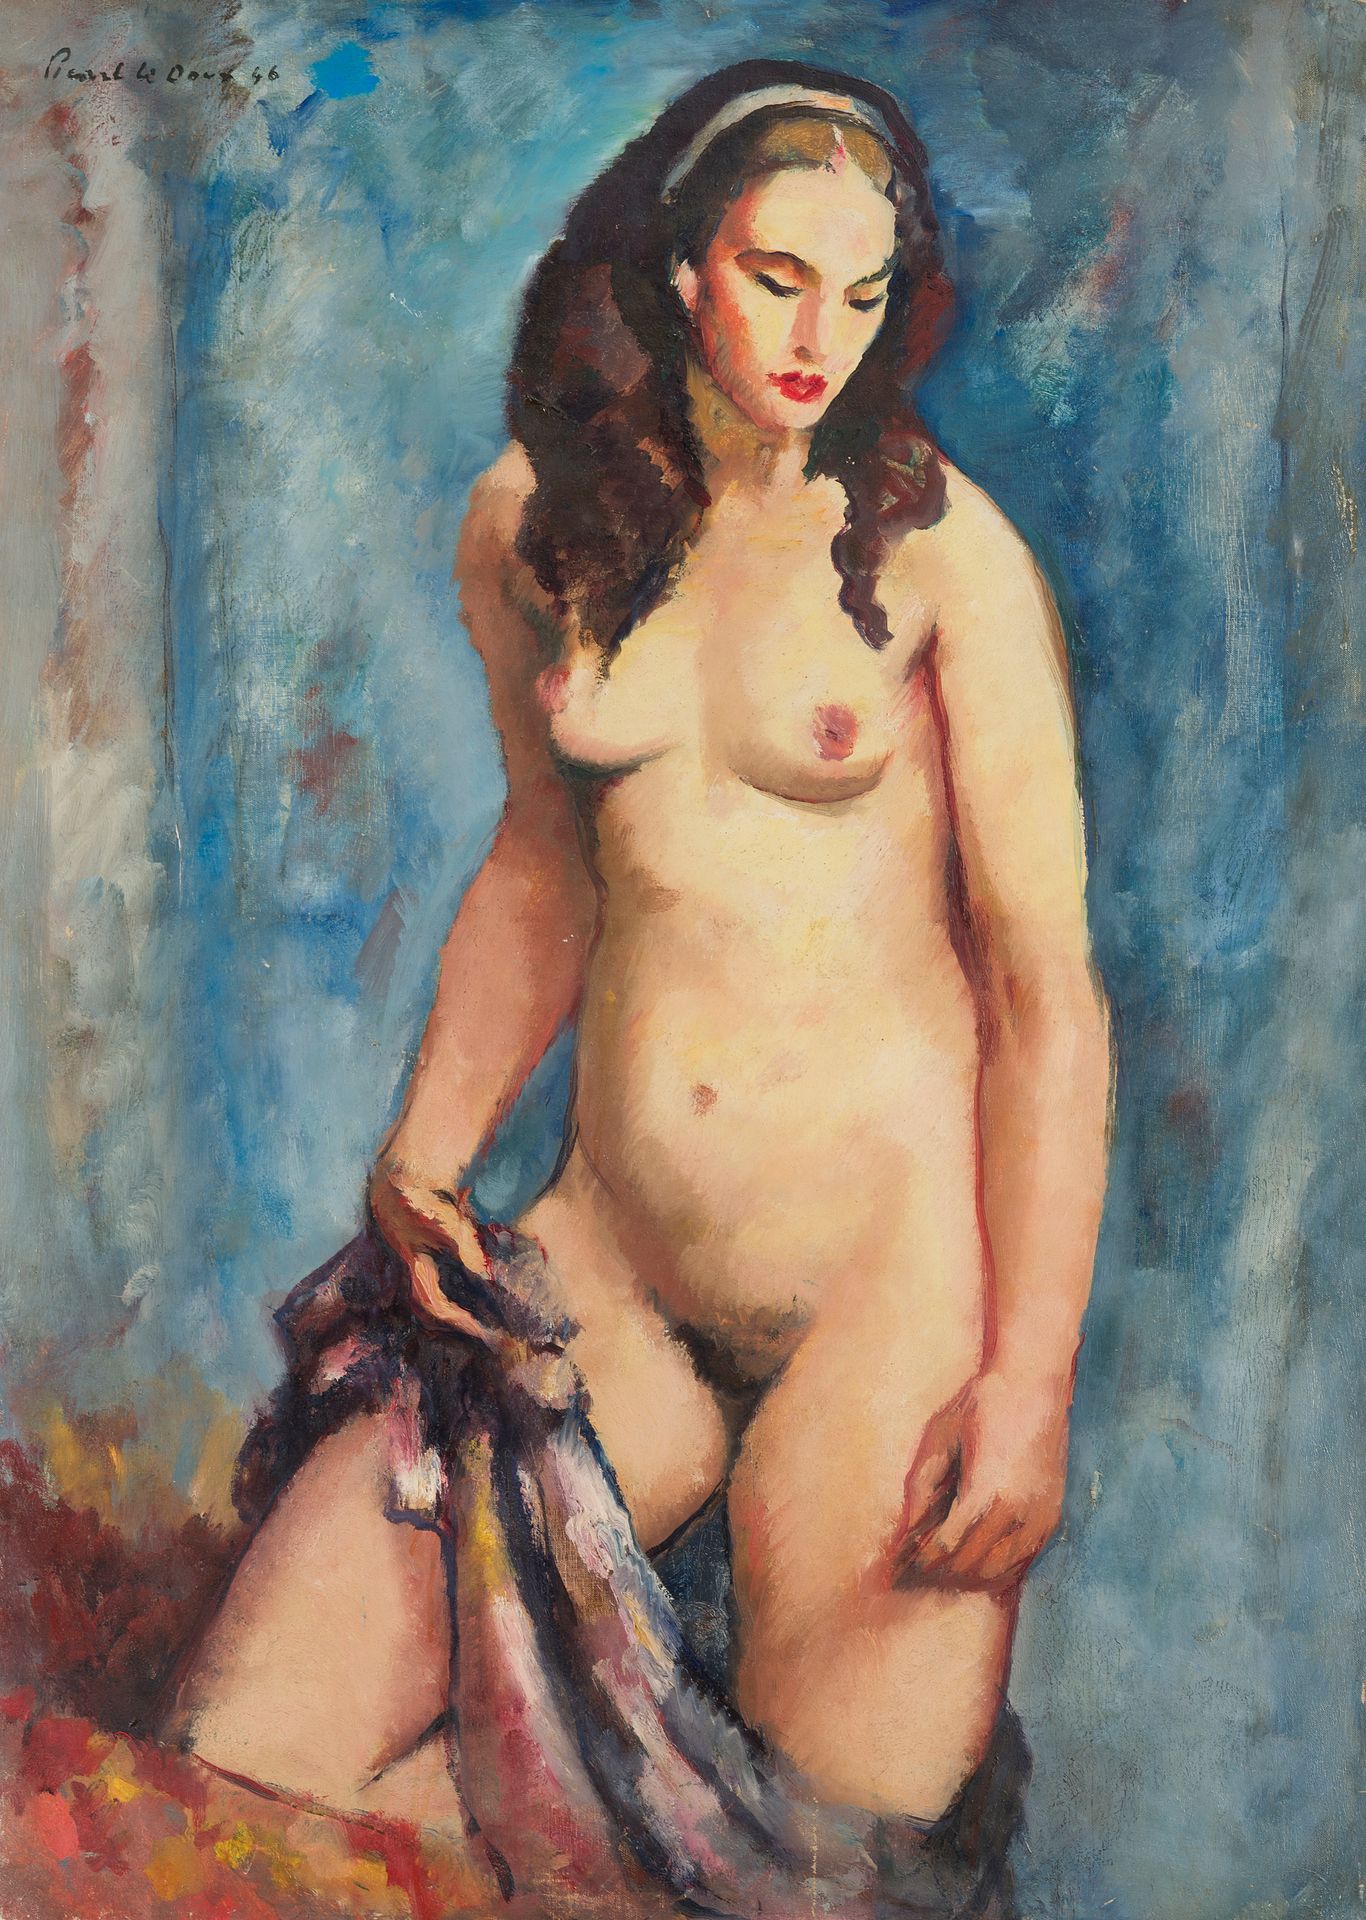 Null 查尔斯-皮卡特-勒杜(1881-1959)
蓝色裸体》，1946年
布面油画
左上方有签名和日期
93 x 65 cm